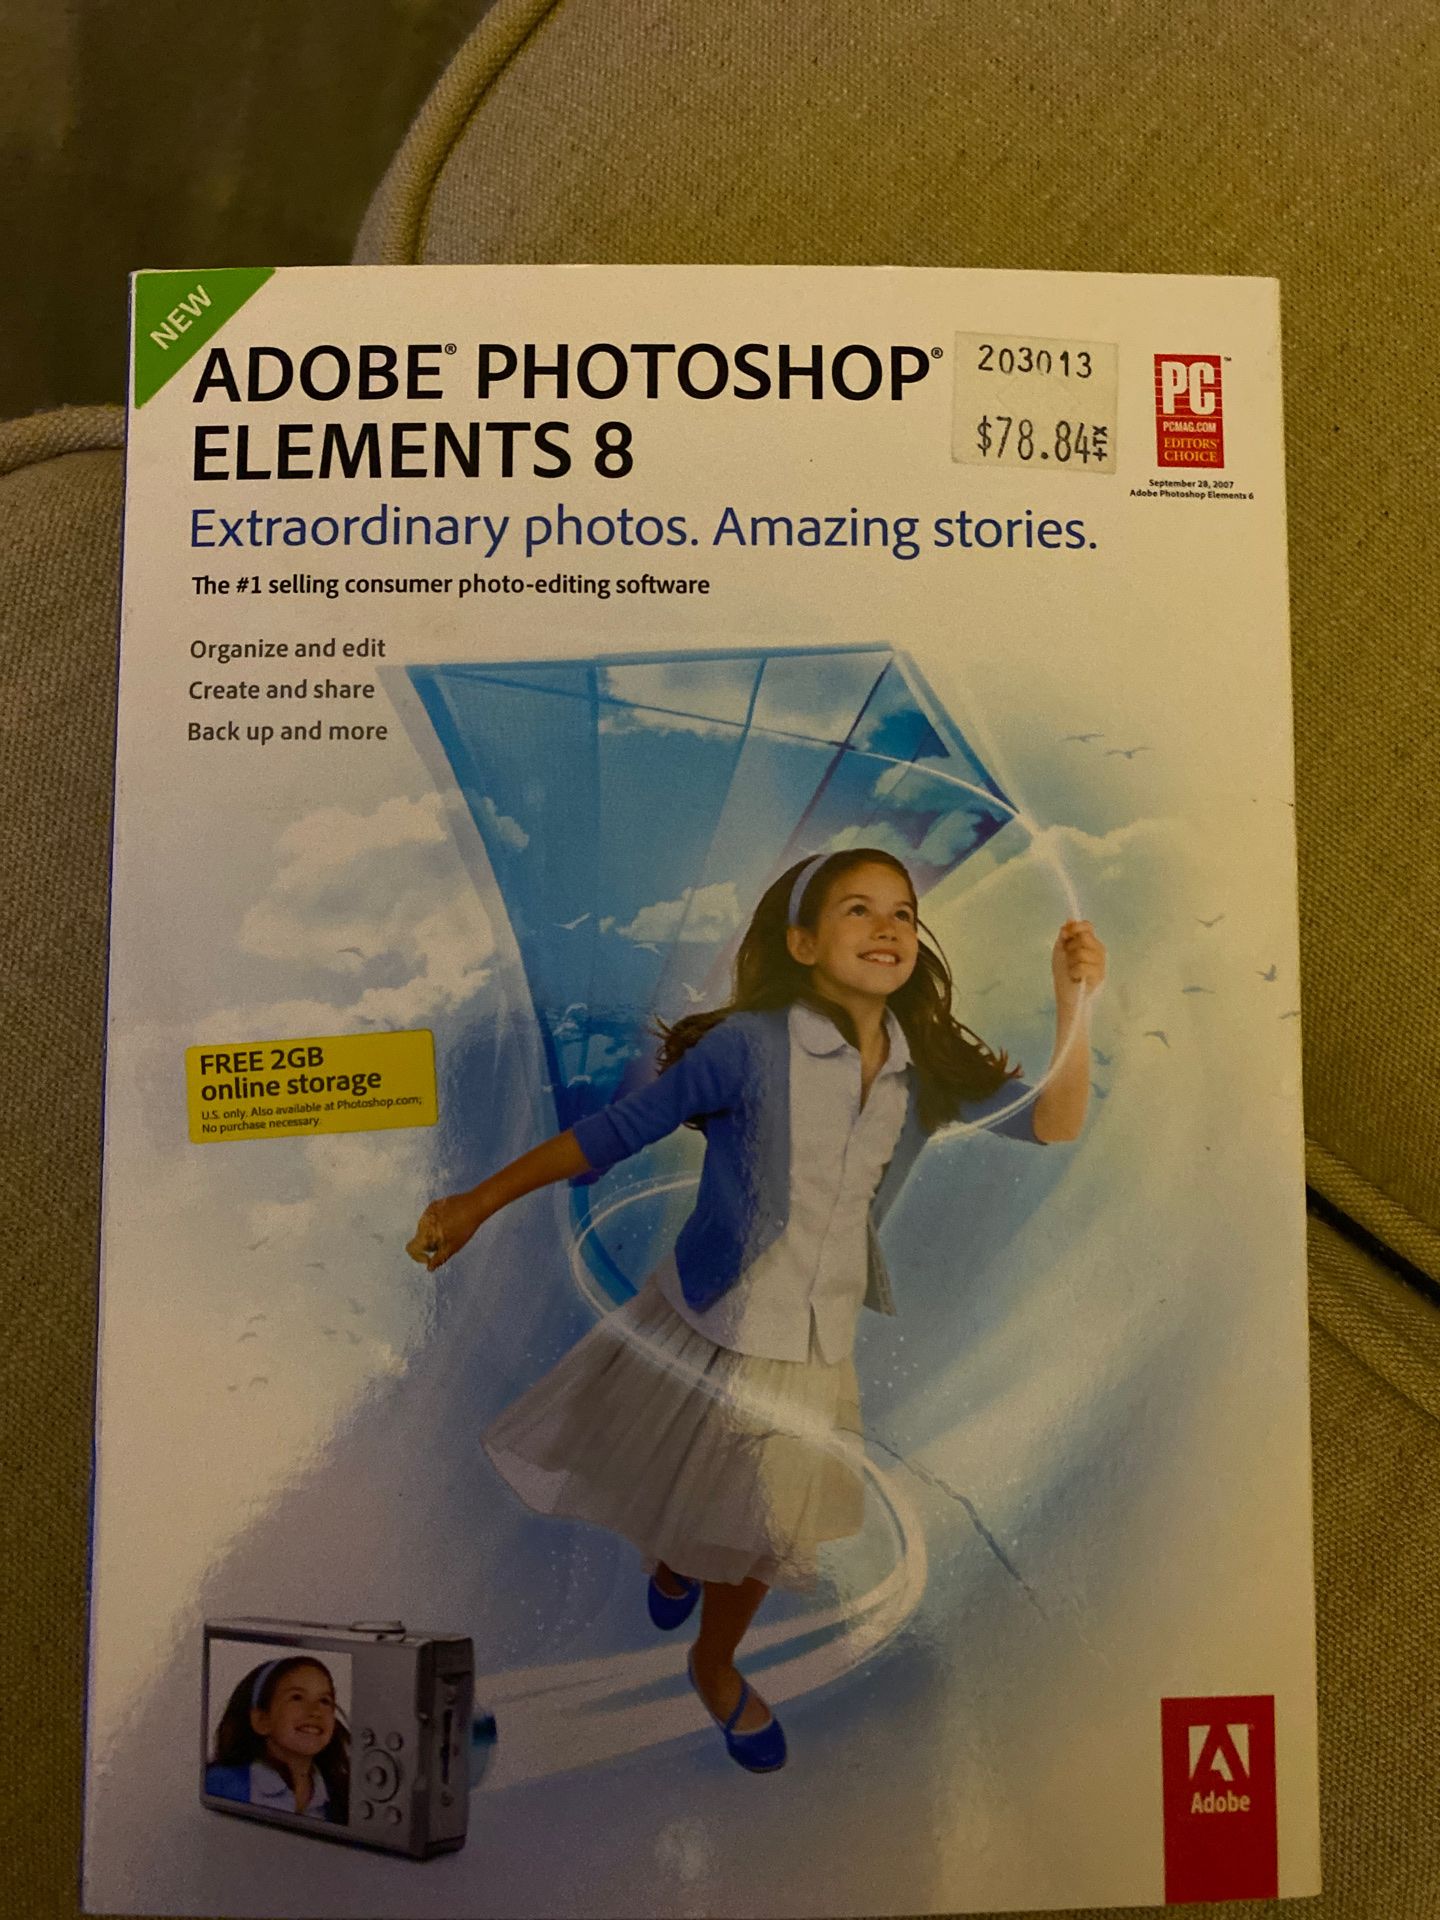 Adobe photoshop elements 8